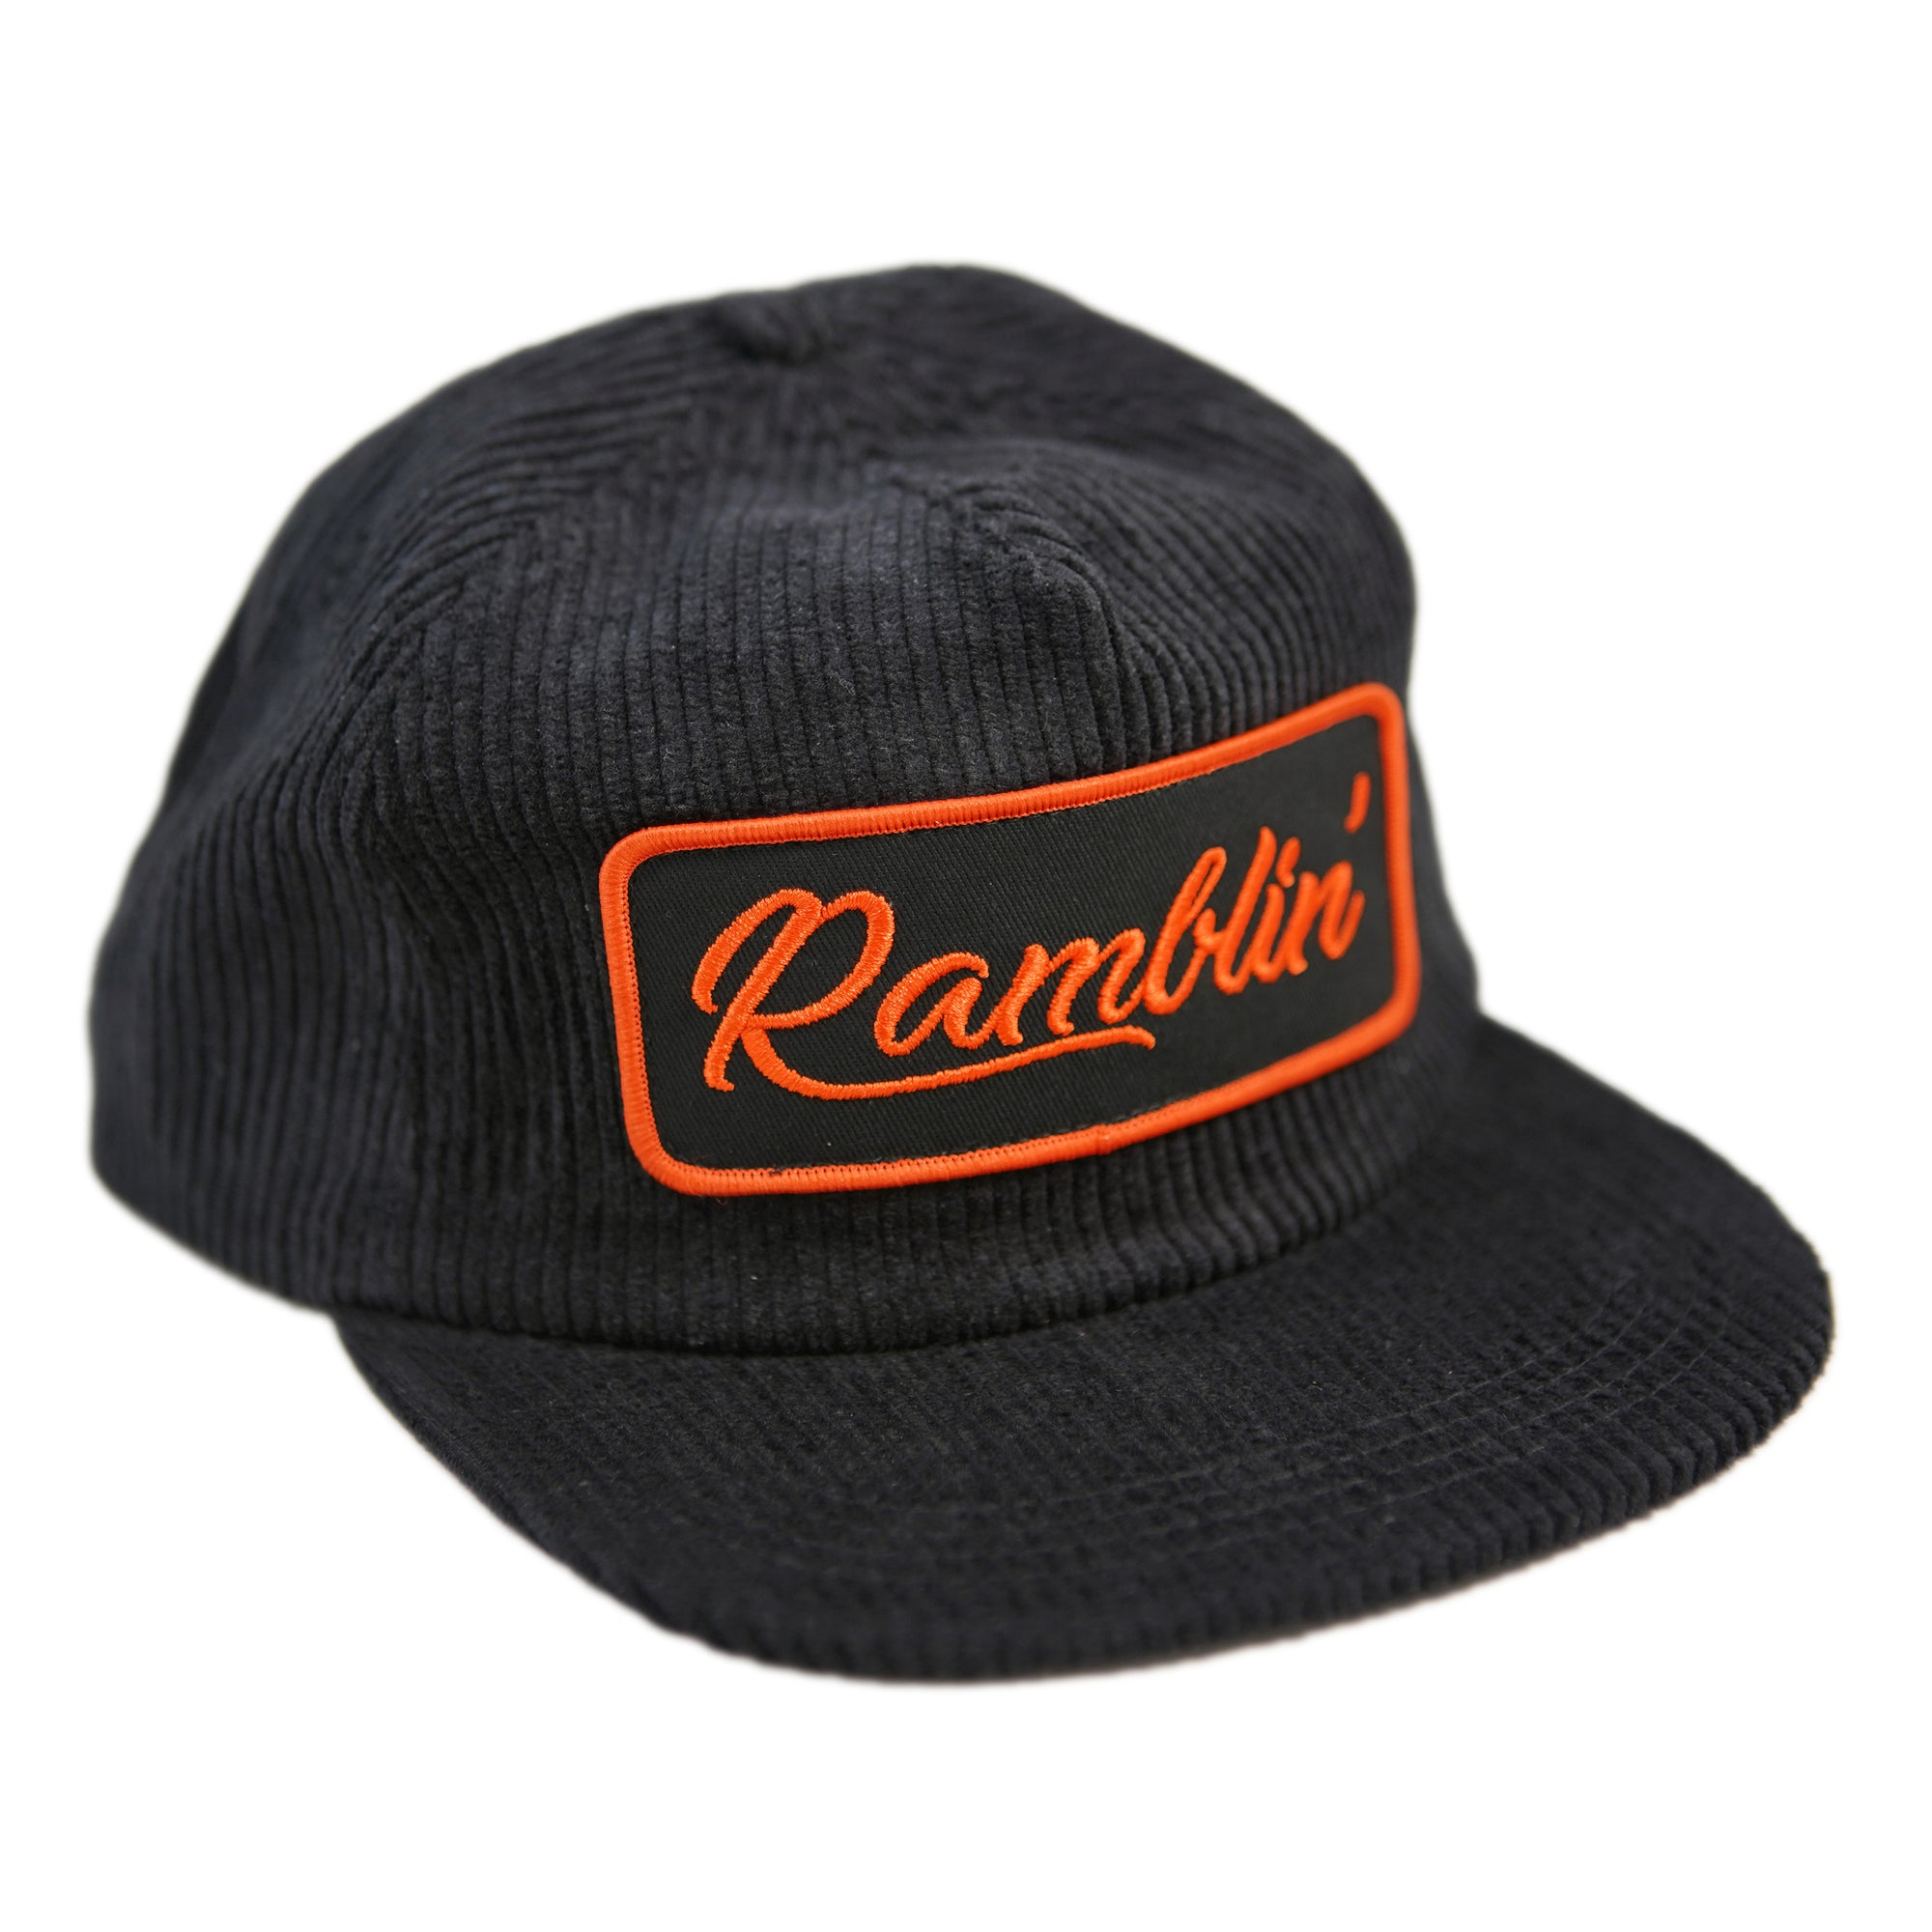 Ramblin' Black Corduroy Hat